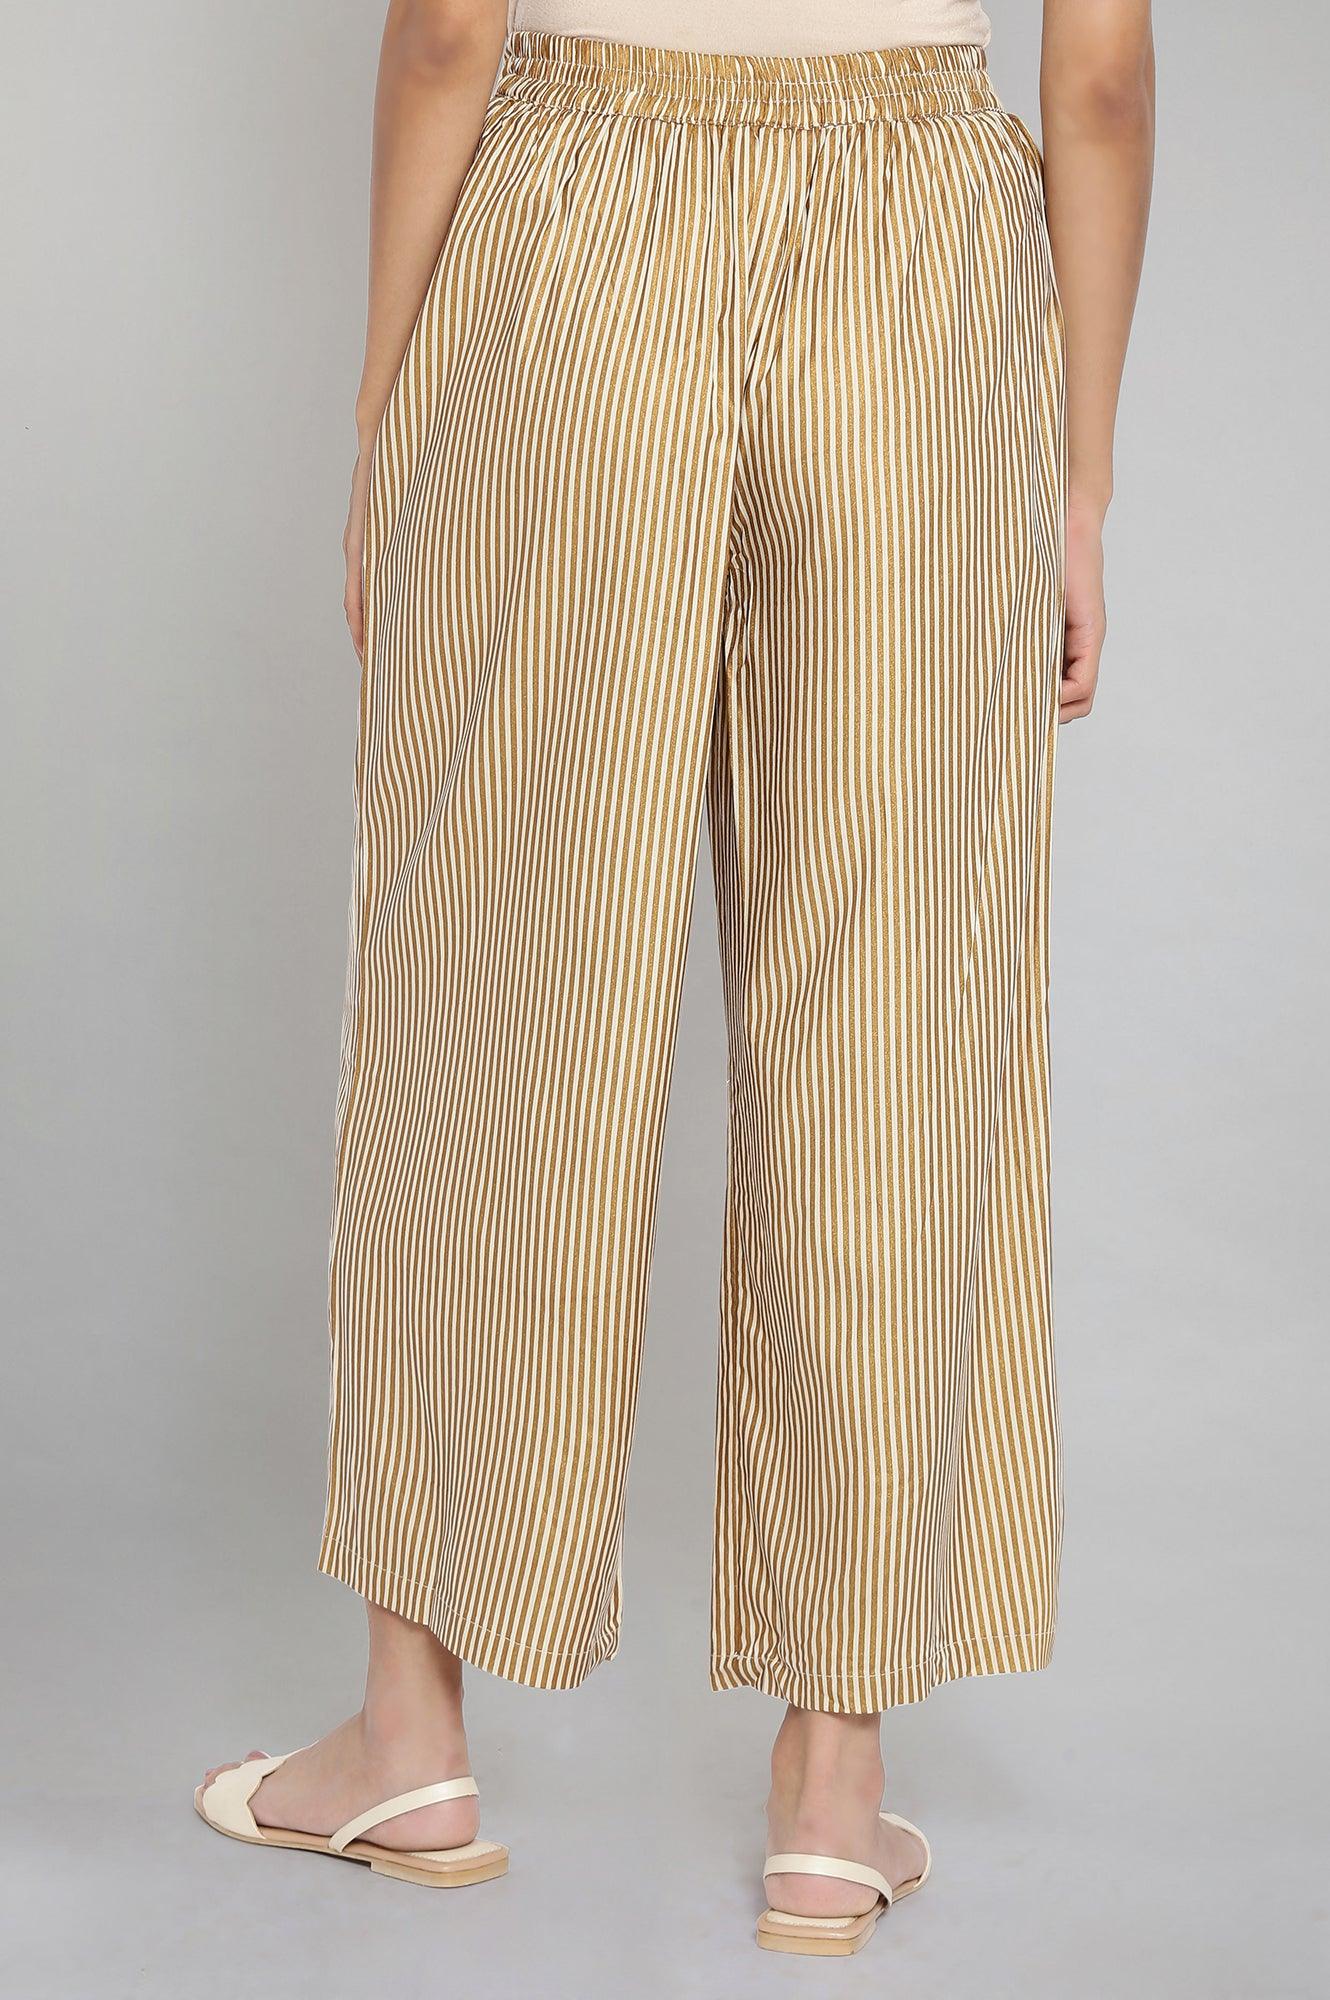 Brown Stripe Printed Parallel Pants - wforwoman